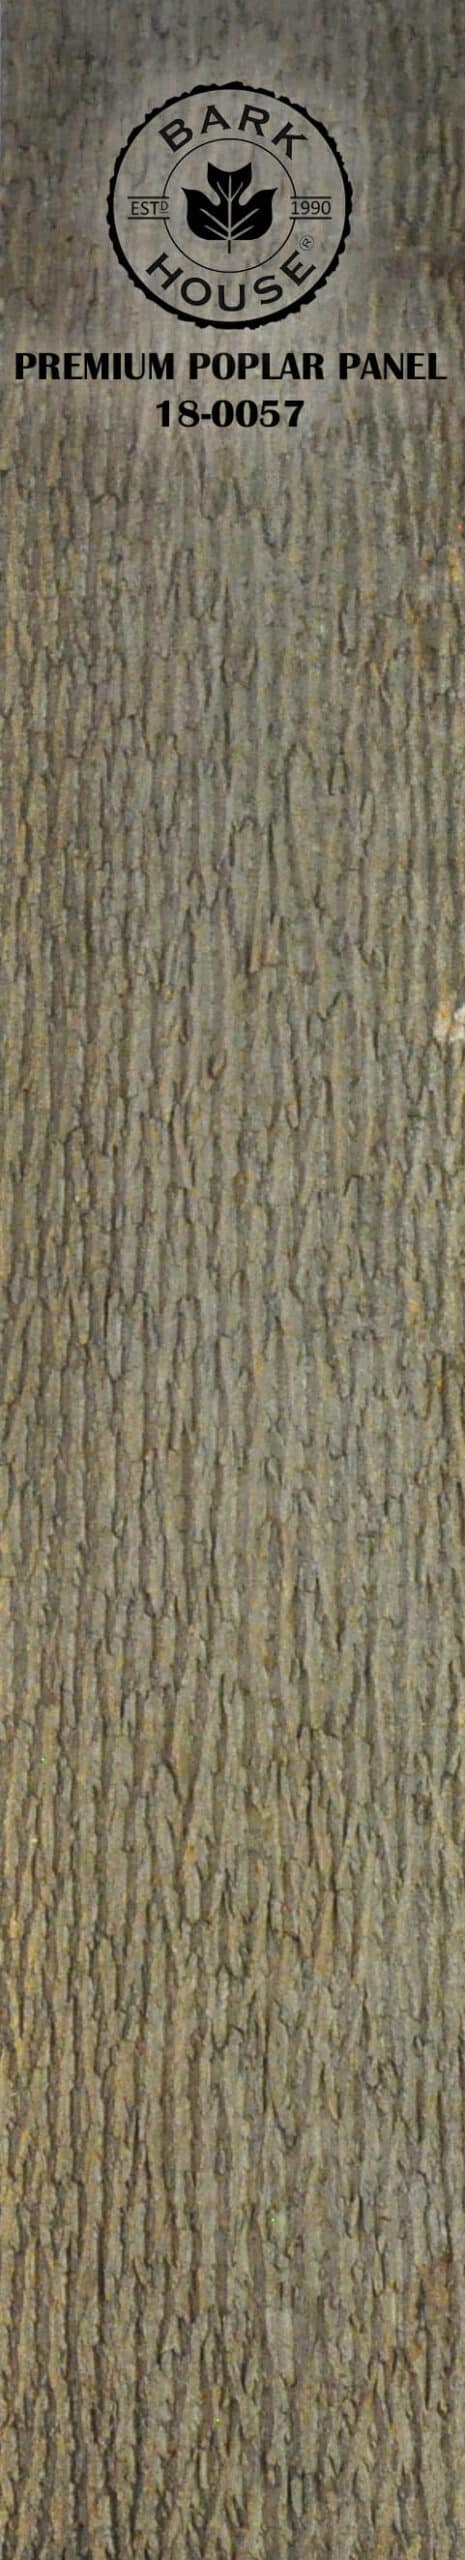 Bark House poplar bark panel SKU POPP-PRE-18-0057